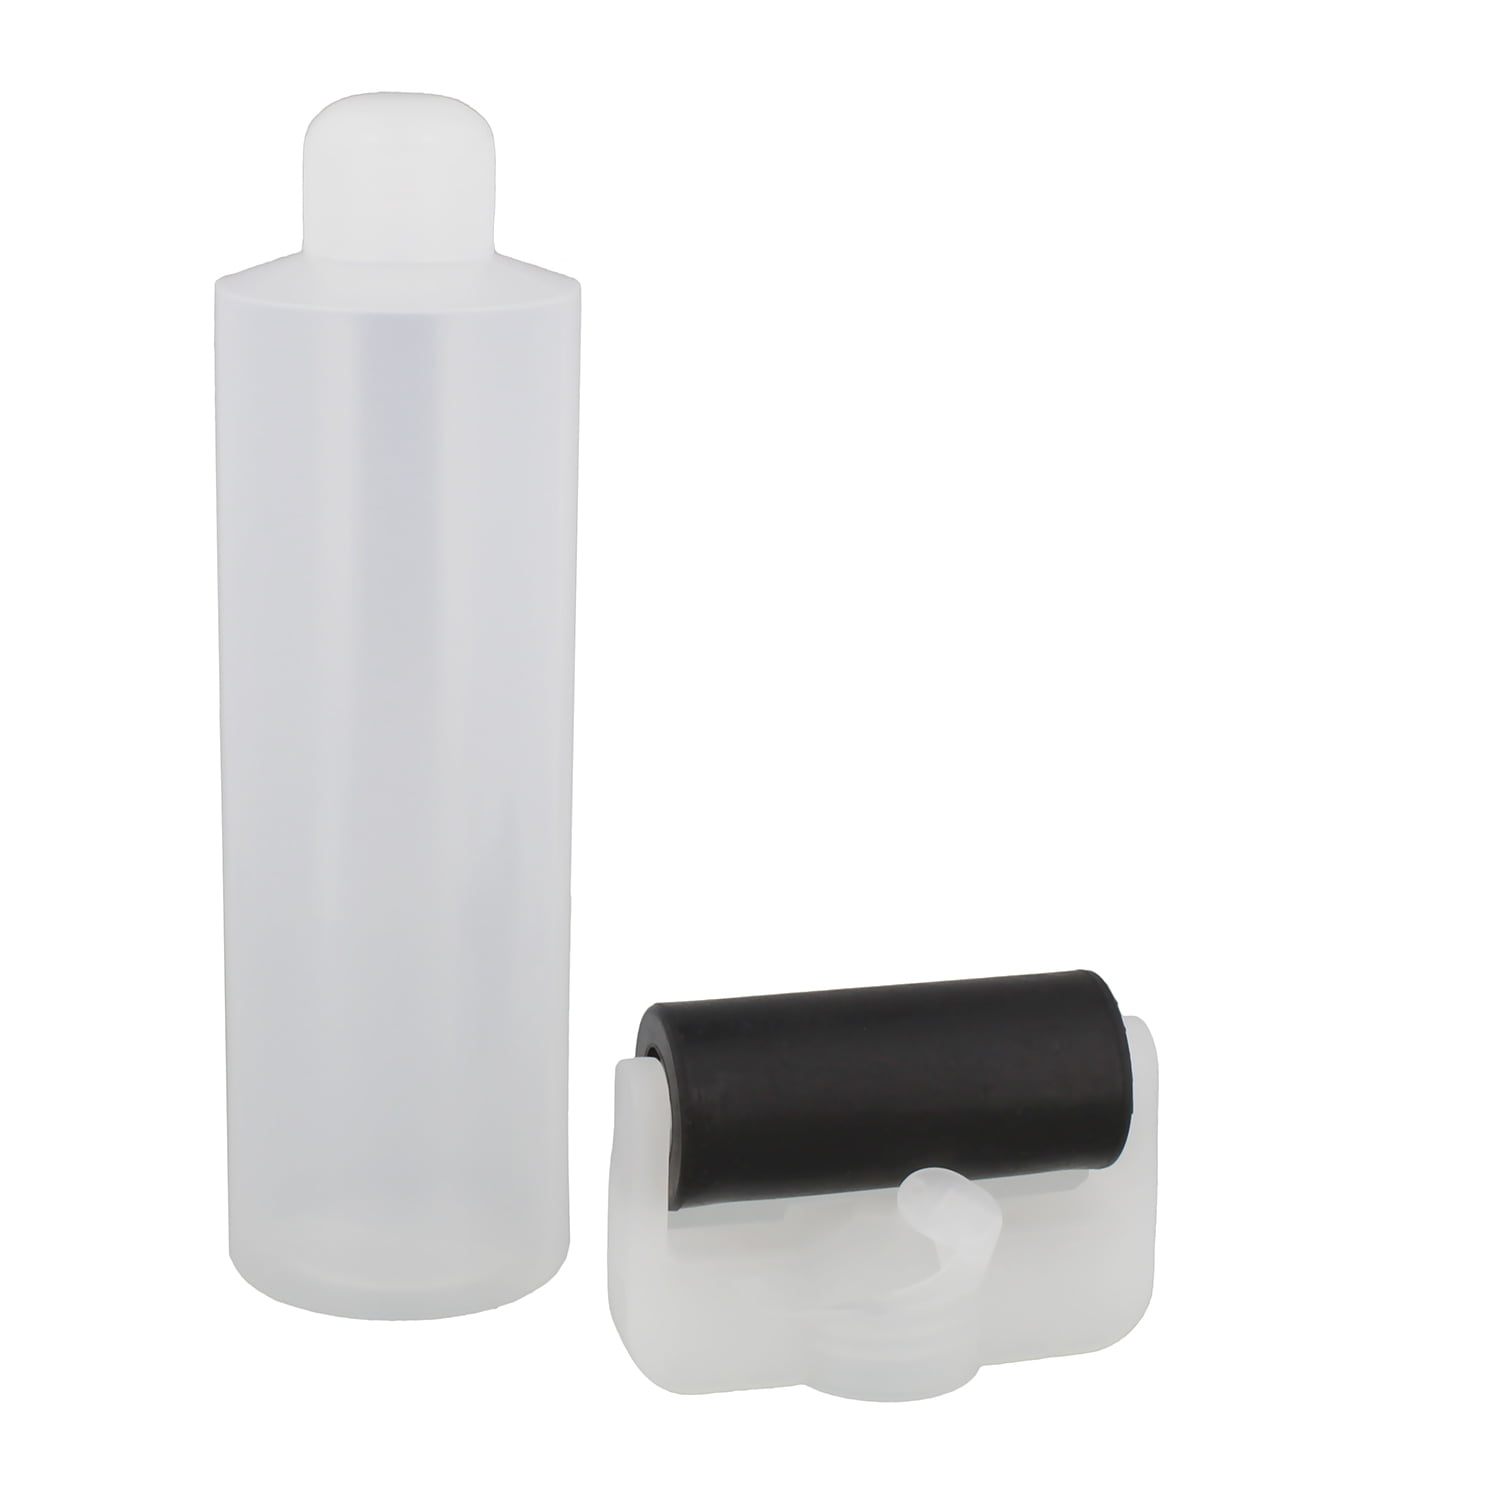 Taytools 500015 8 oz. Glue Roller Bottle Applicator with 2-1/2 Wide Roller for Flat Surfaces